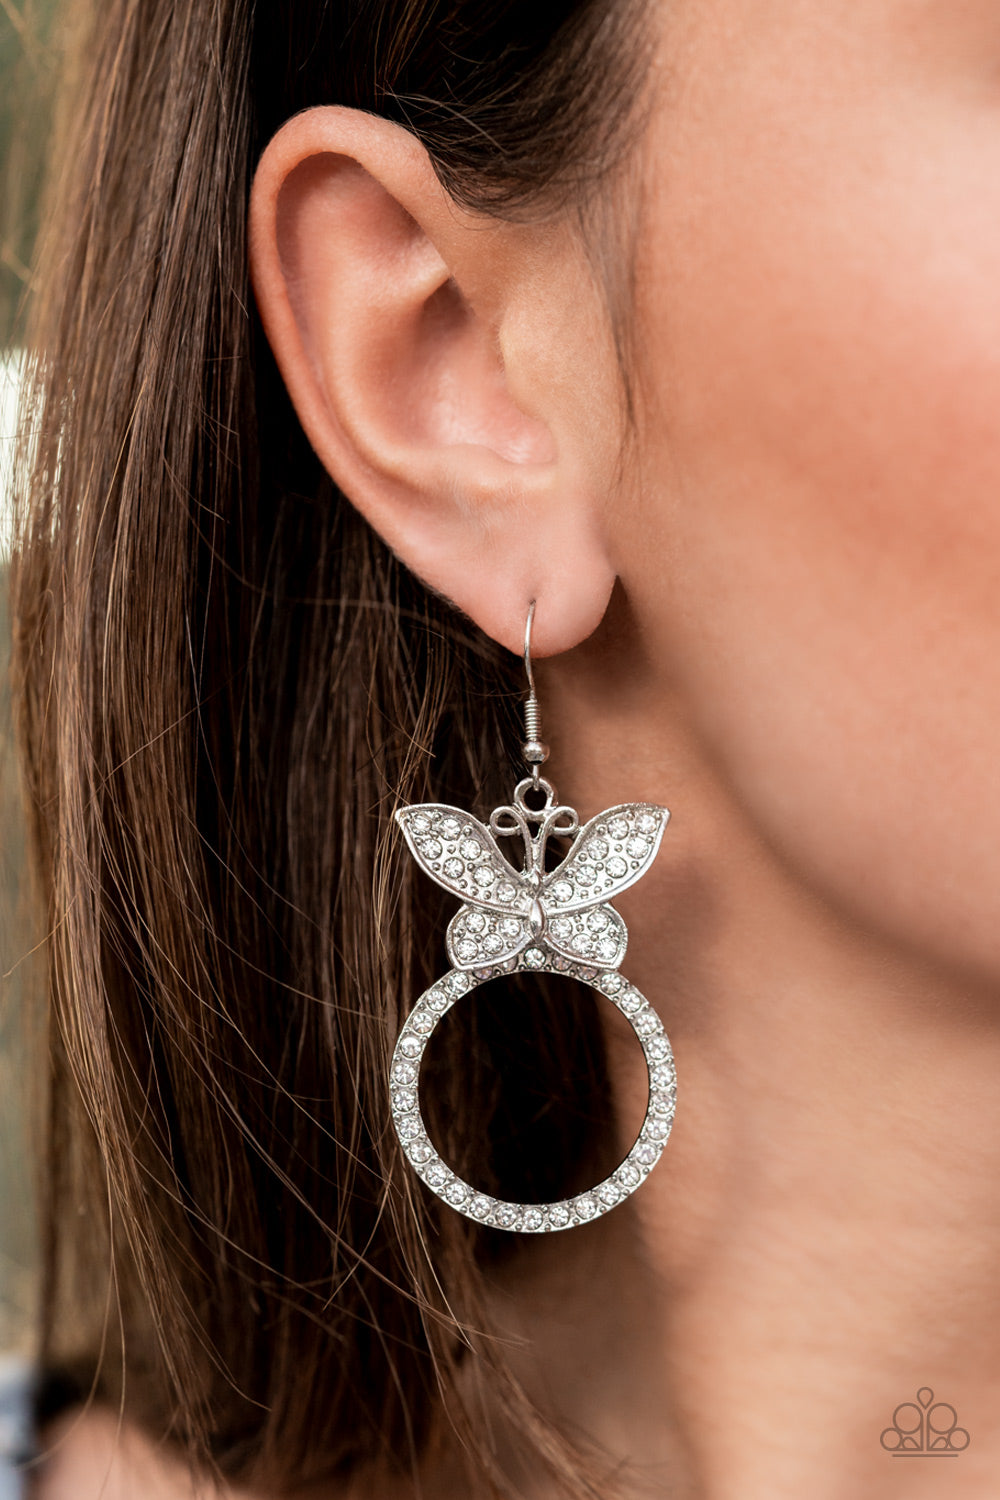 Paradise Found - White Rhinestone Earrings - Paparazzi Accessories - GlaMarous Titi Jewels